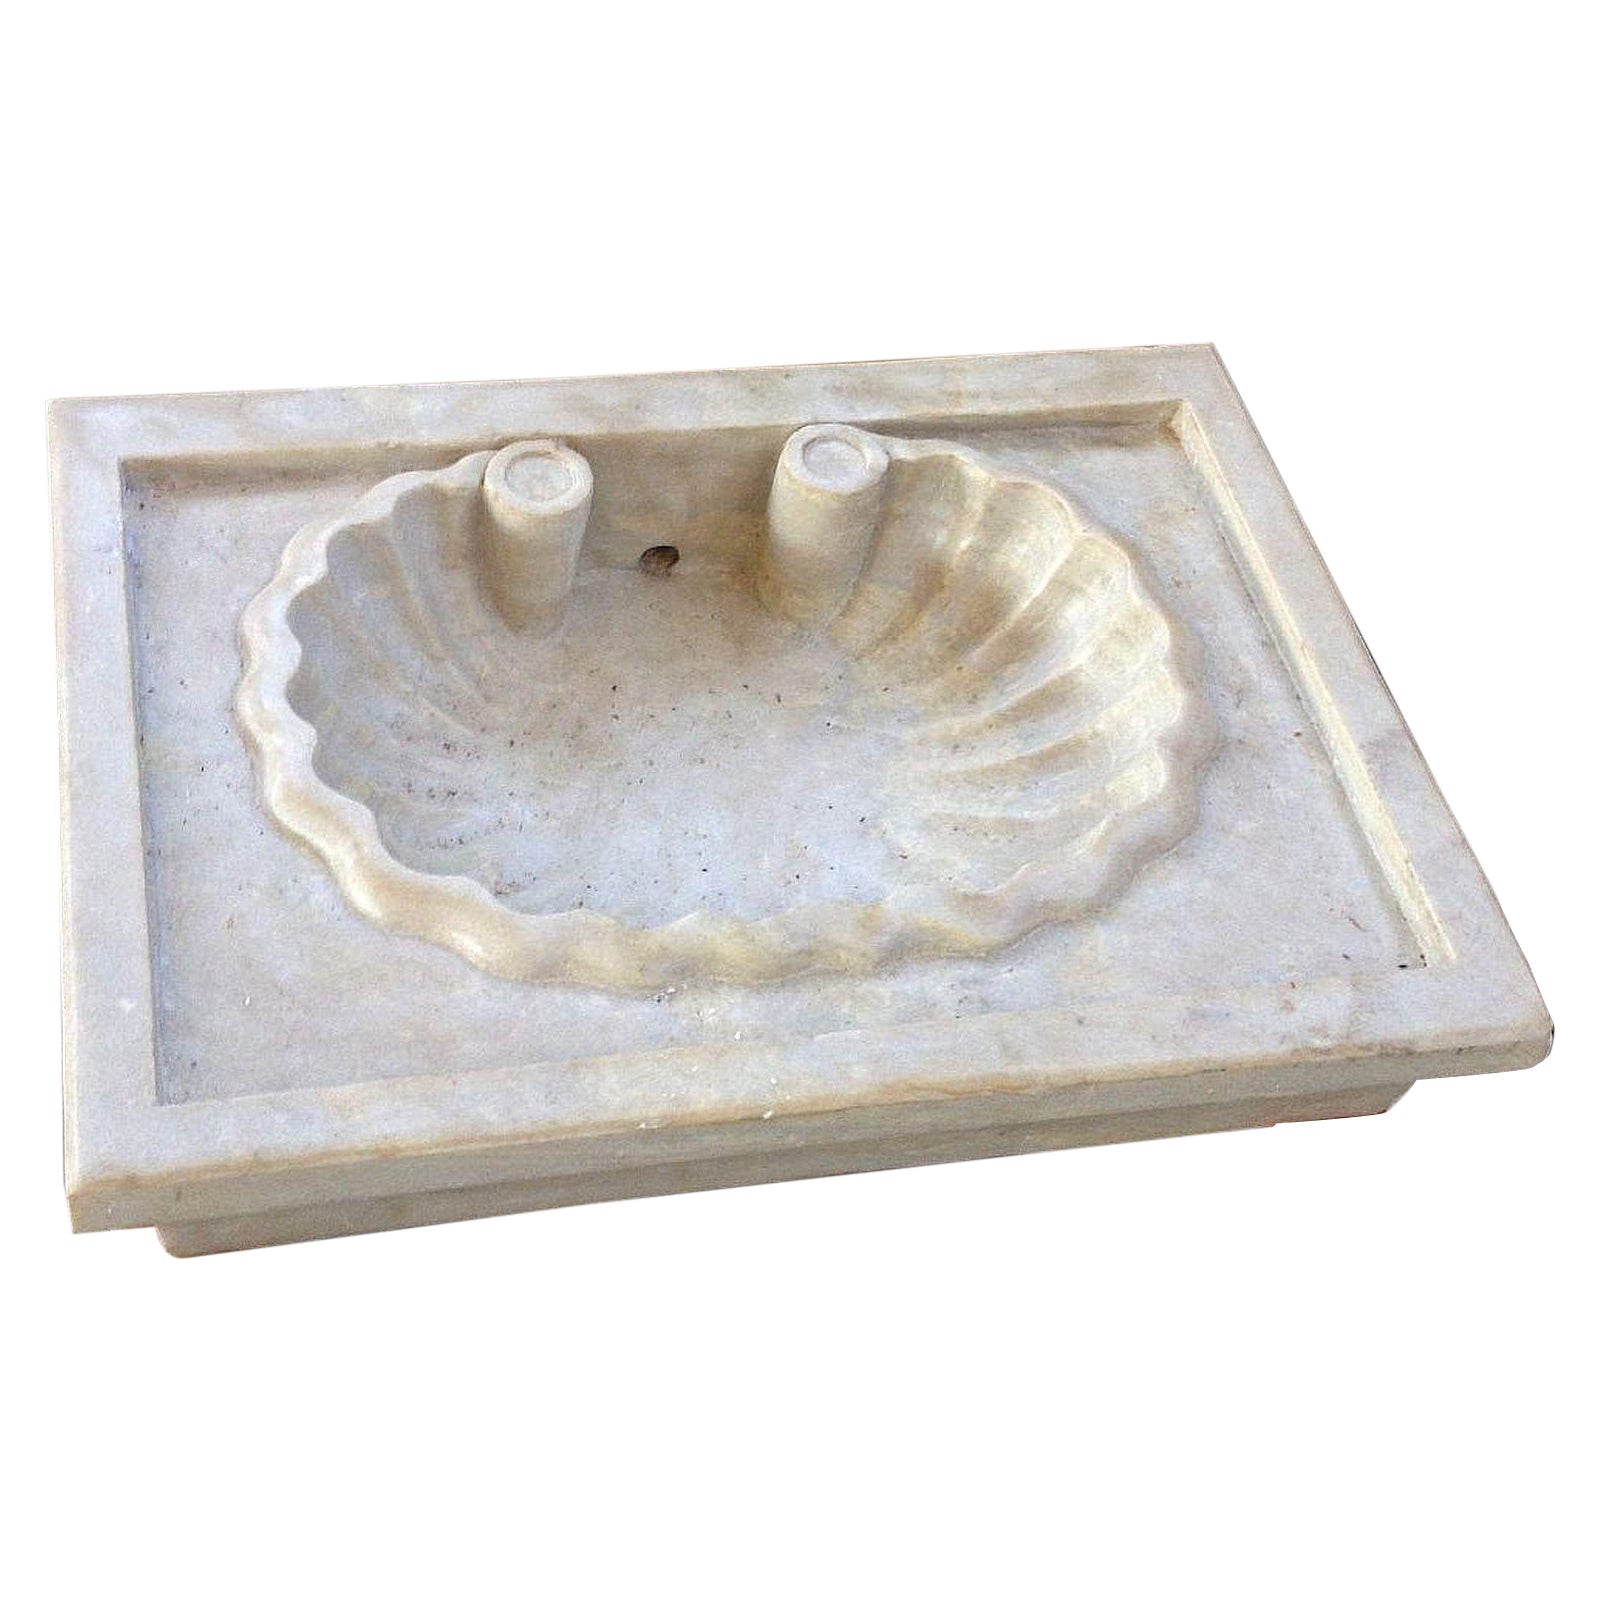 Classical Carrara Marble Shell Sink